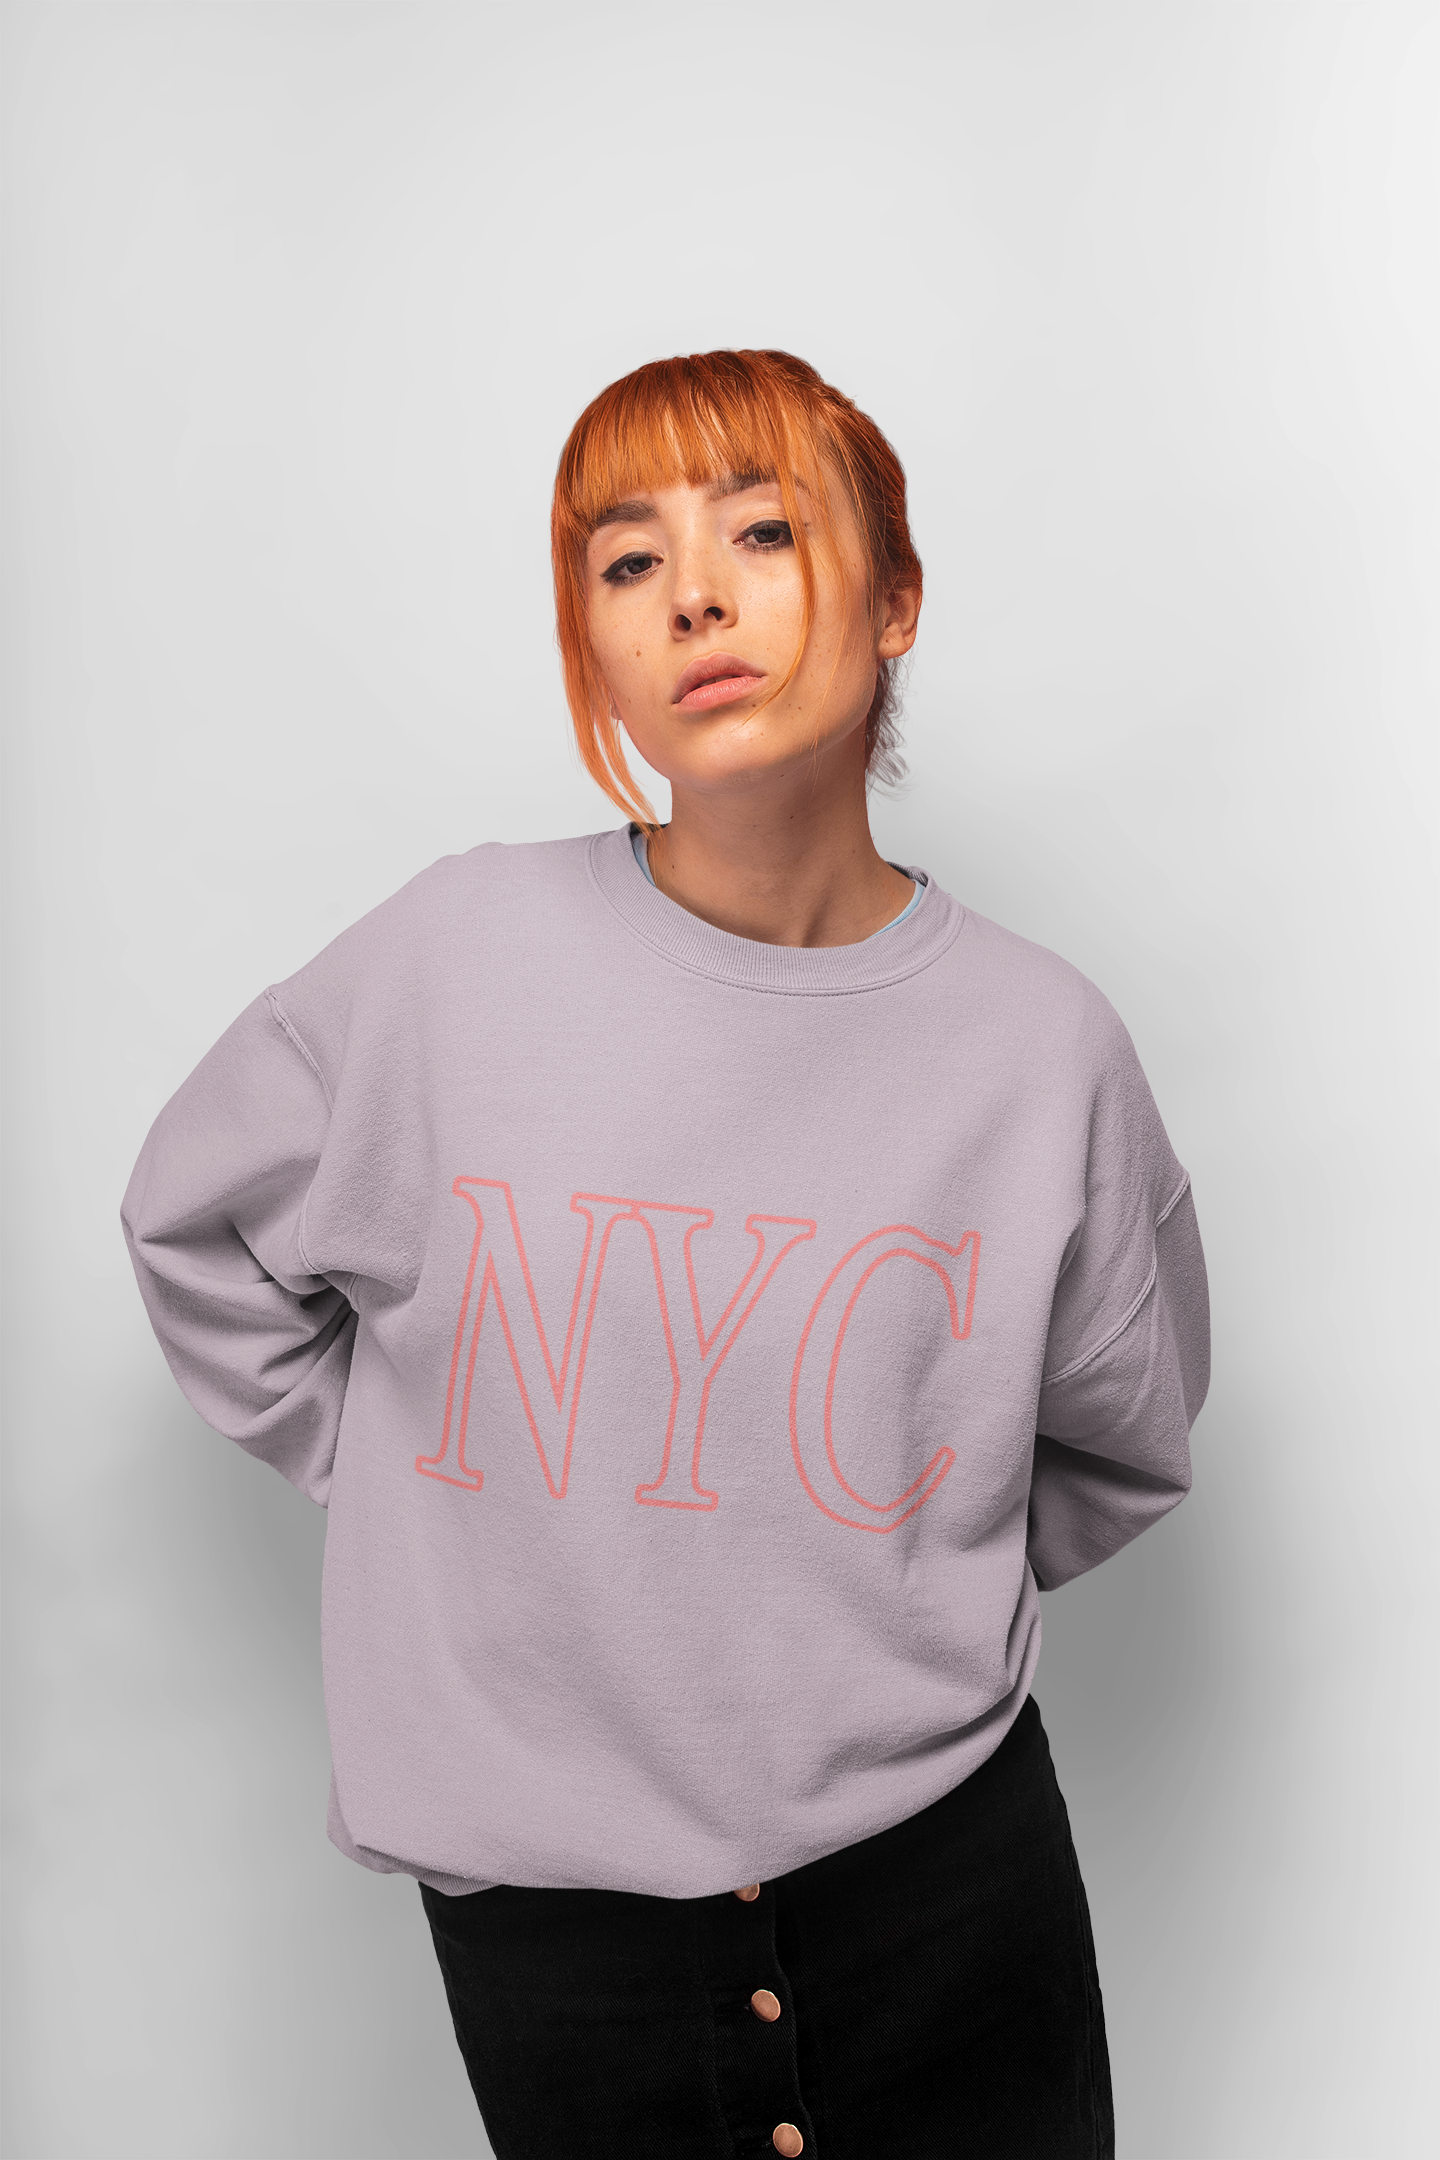 NYC Crewneck Sweater